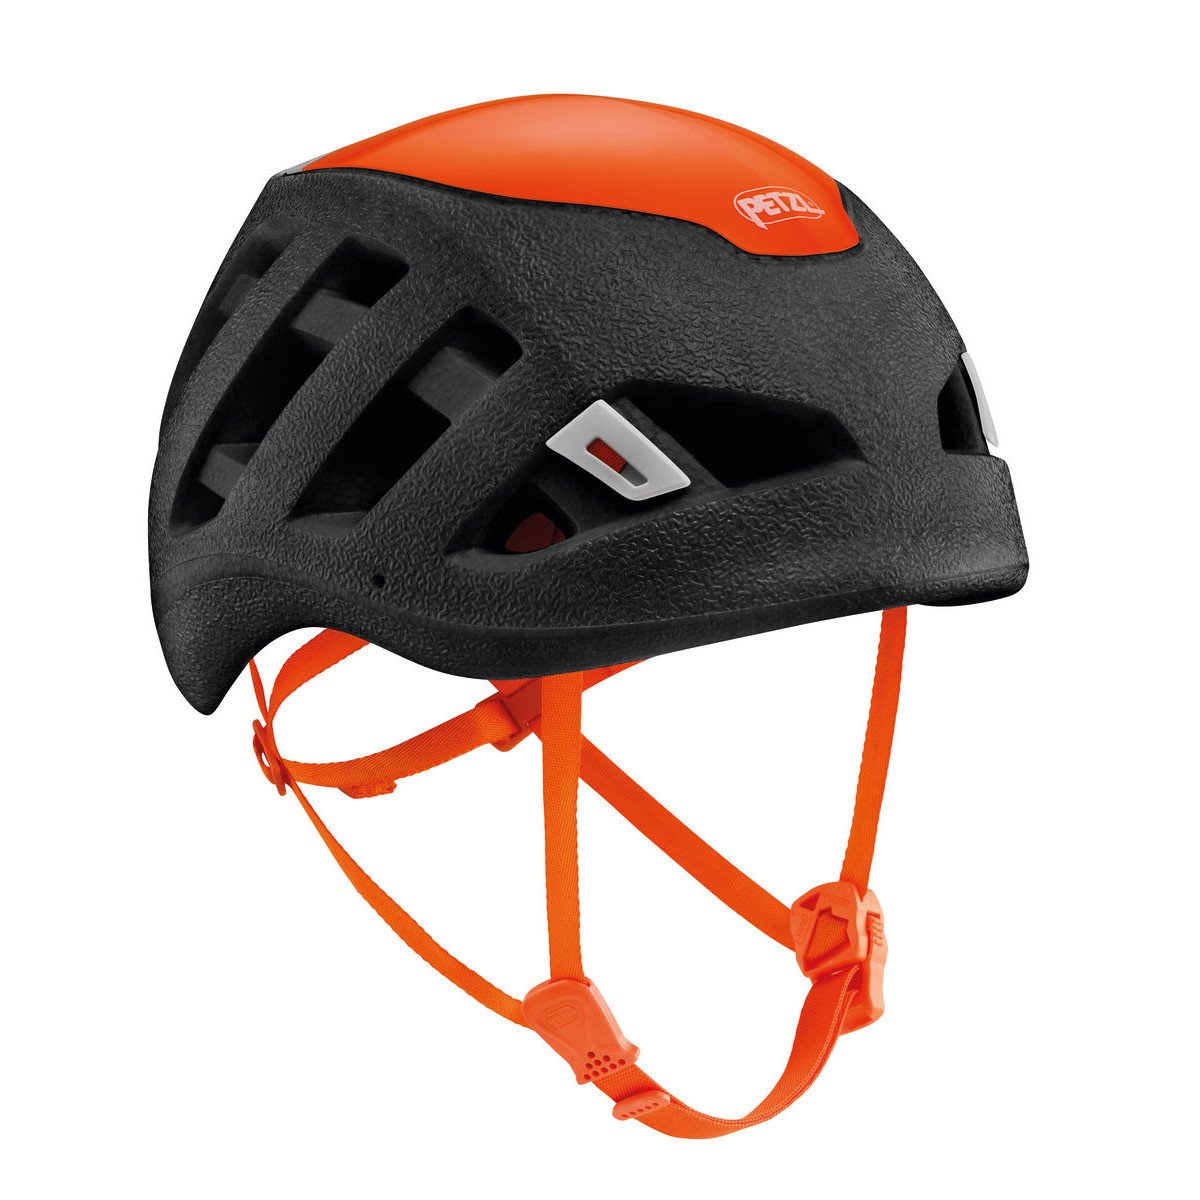 petzl sirocco climbing helmet, in black and orange colours